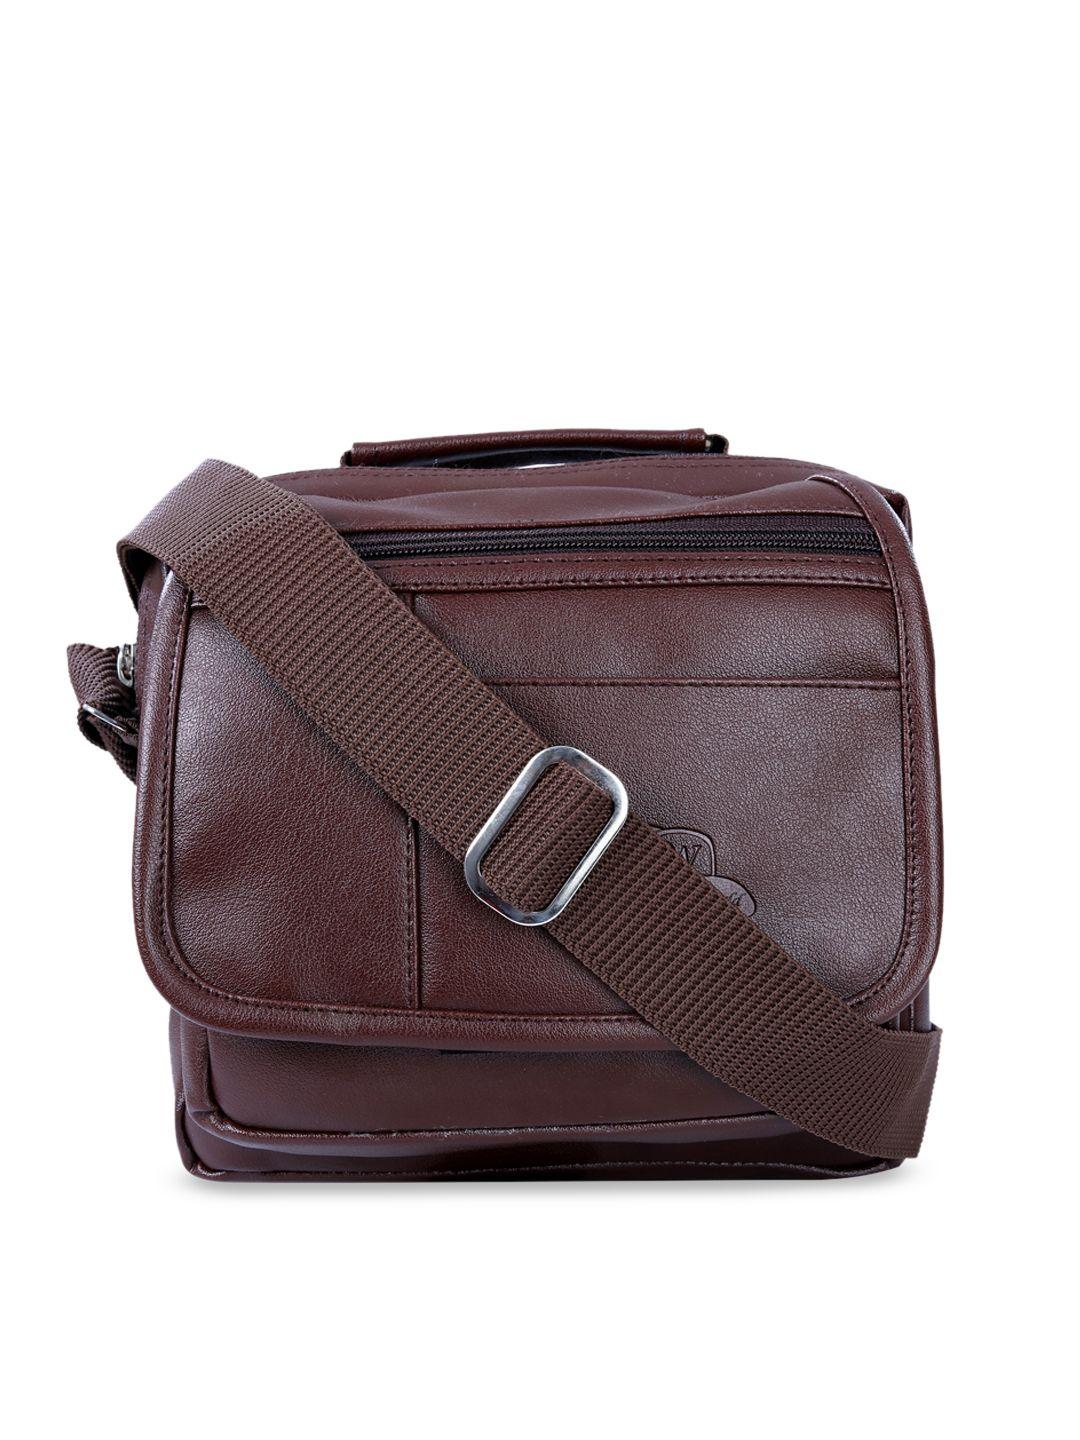 leather world unisex brown solid messenger bag